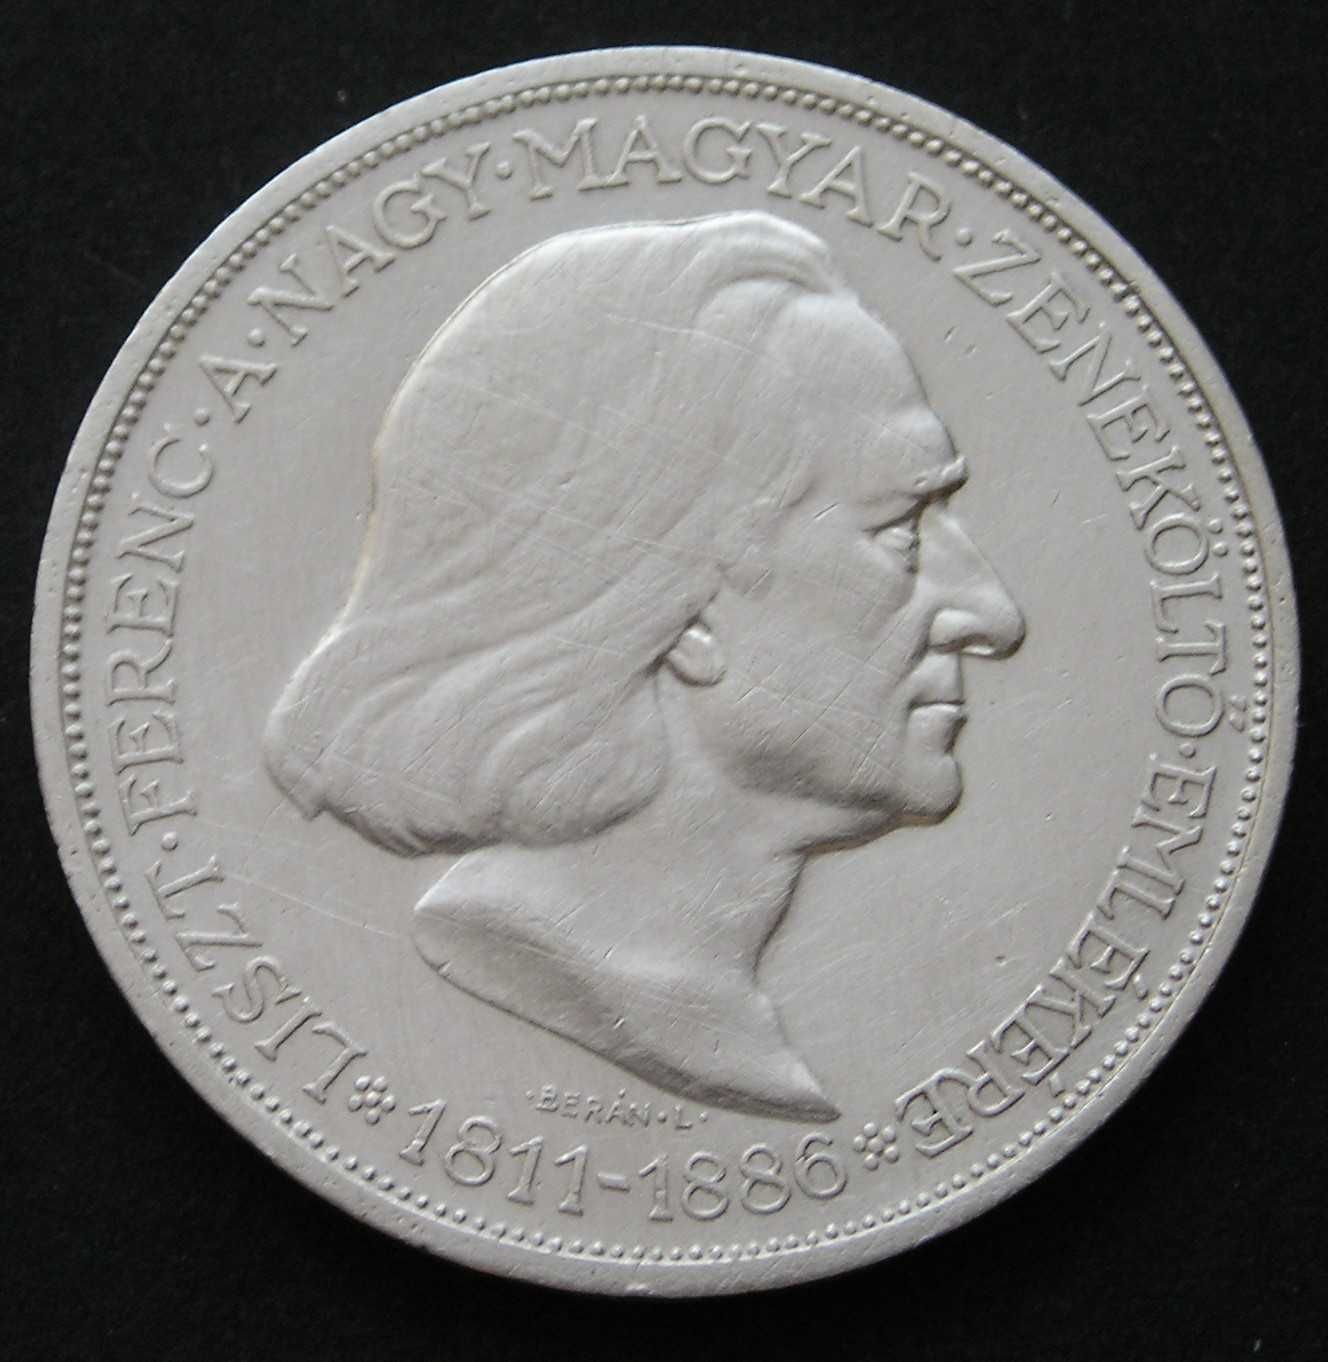 Węgry 2 pengo 1936 - F. Liszt - srebro